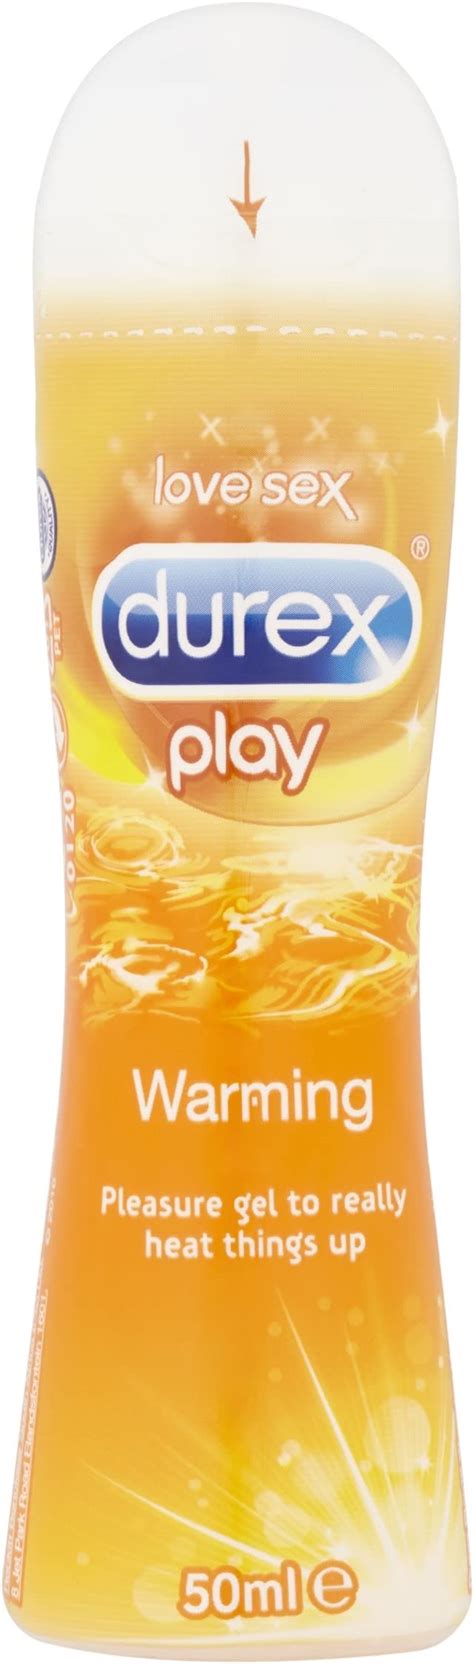 Durex Play Heat Pleasure Enhancing Lubricant Amazonca Health